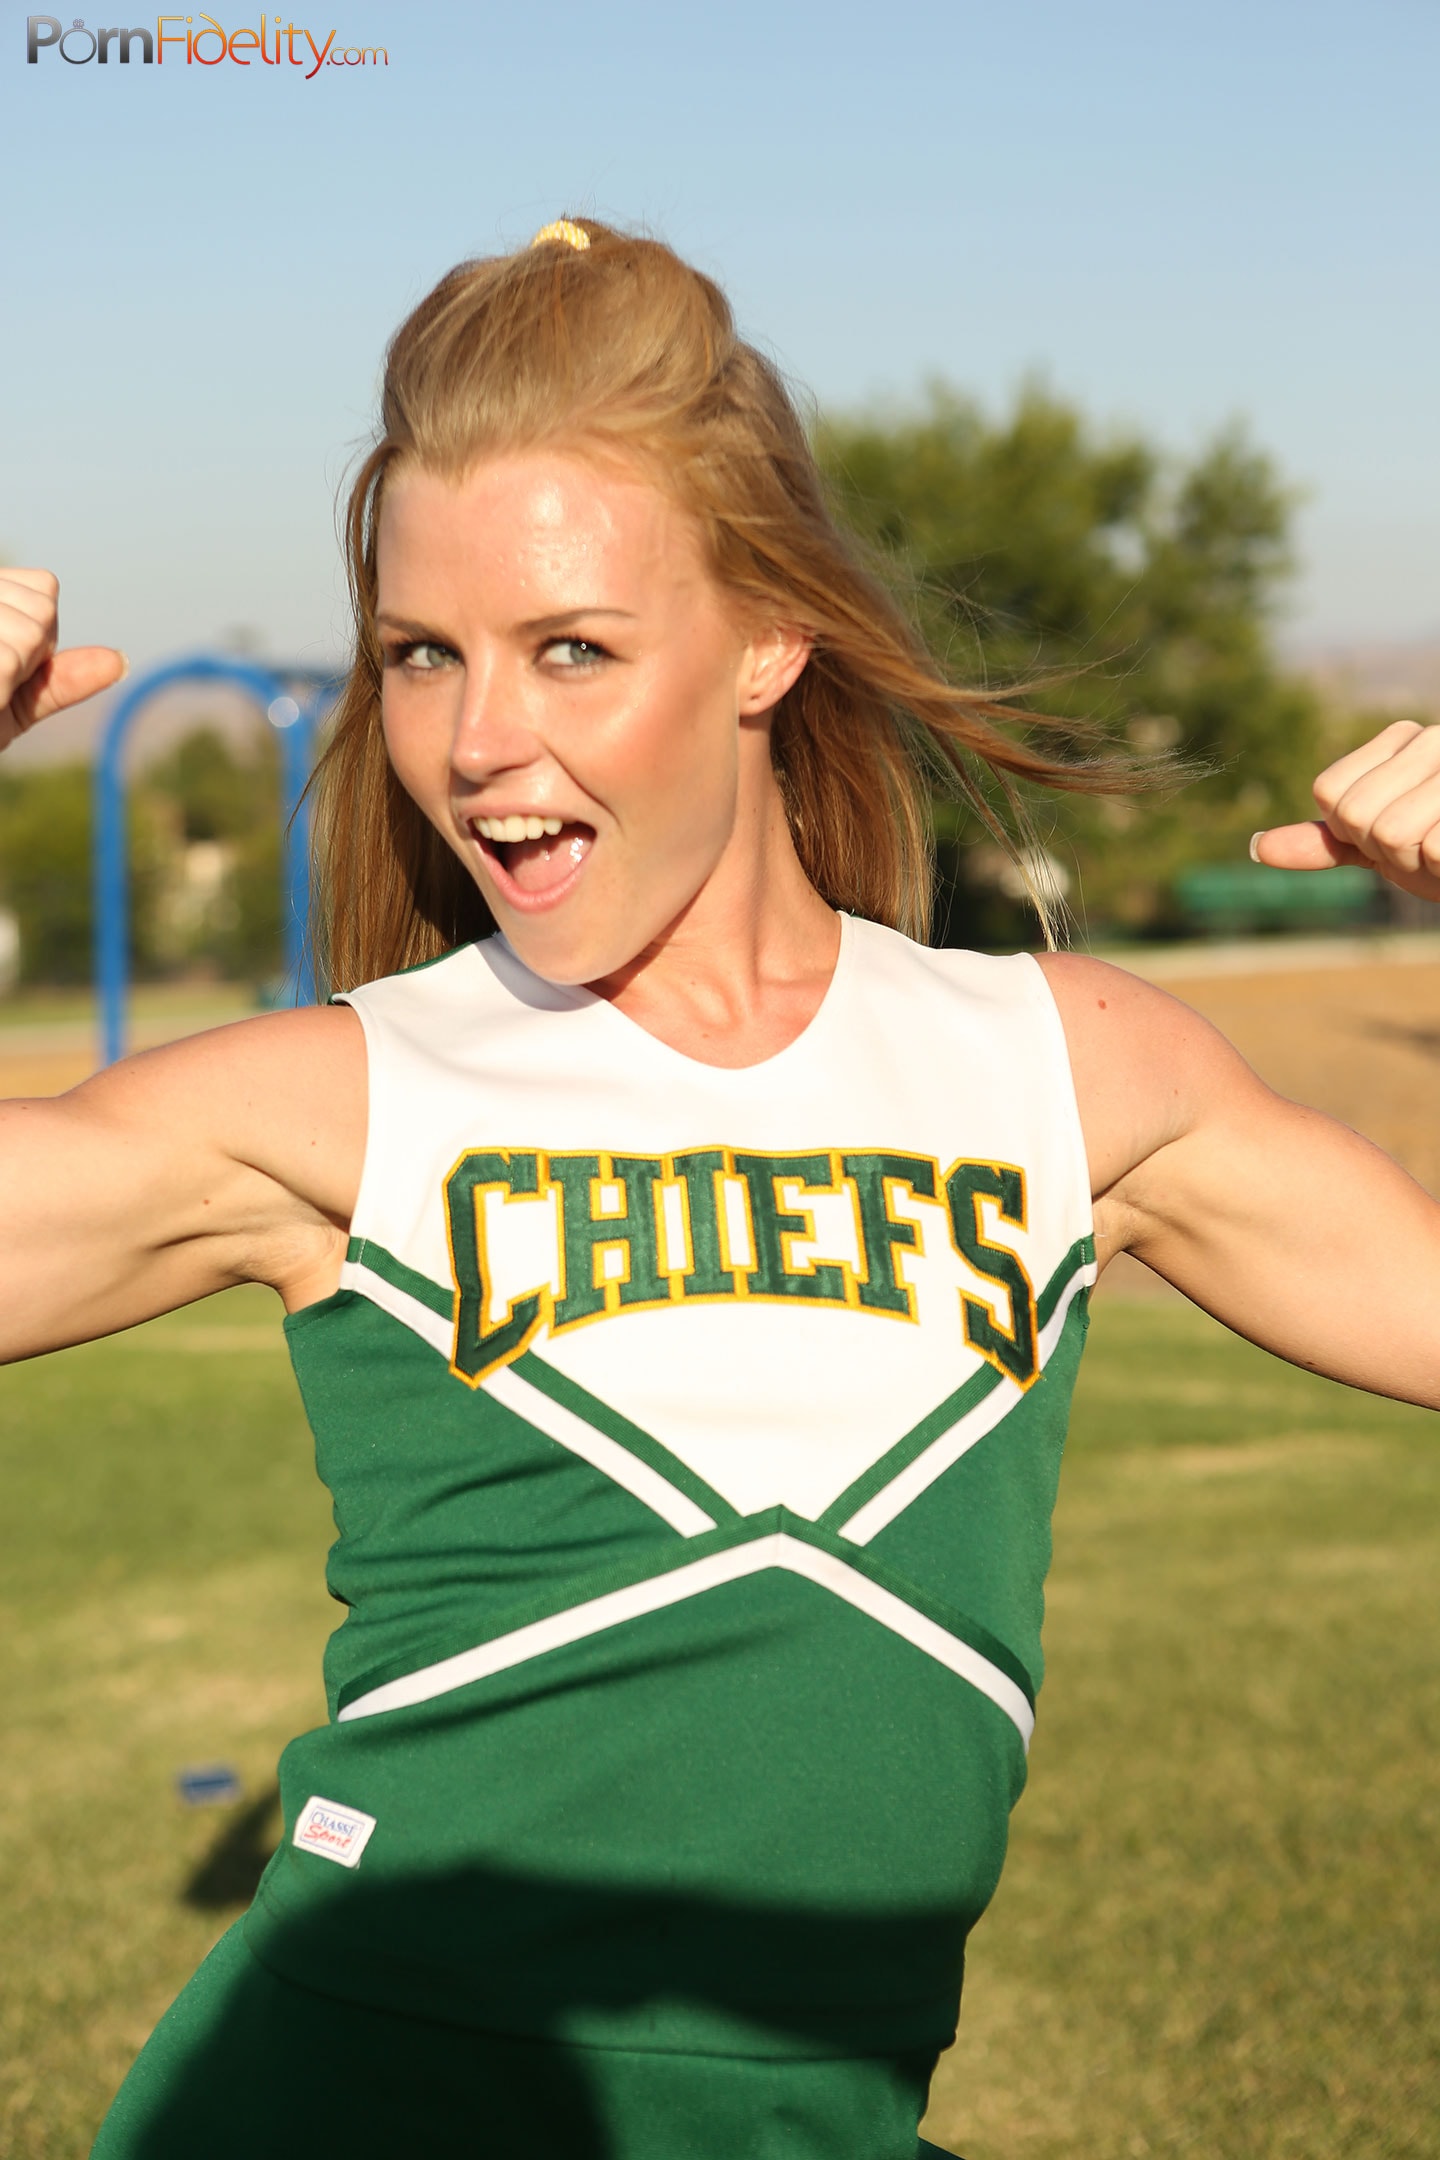 Porn Fidelity 'TFSN Cheerleaders 2' starring Nicole Clitman (Photo 48)